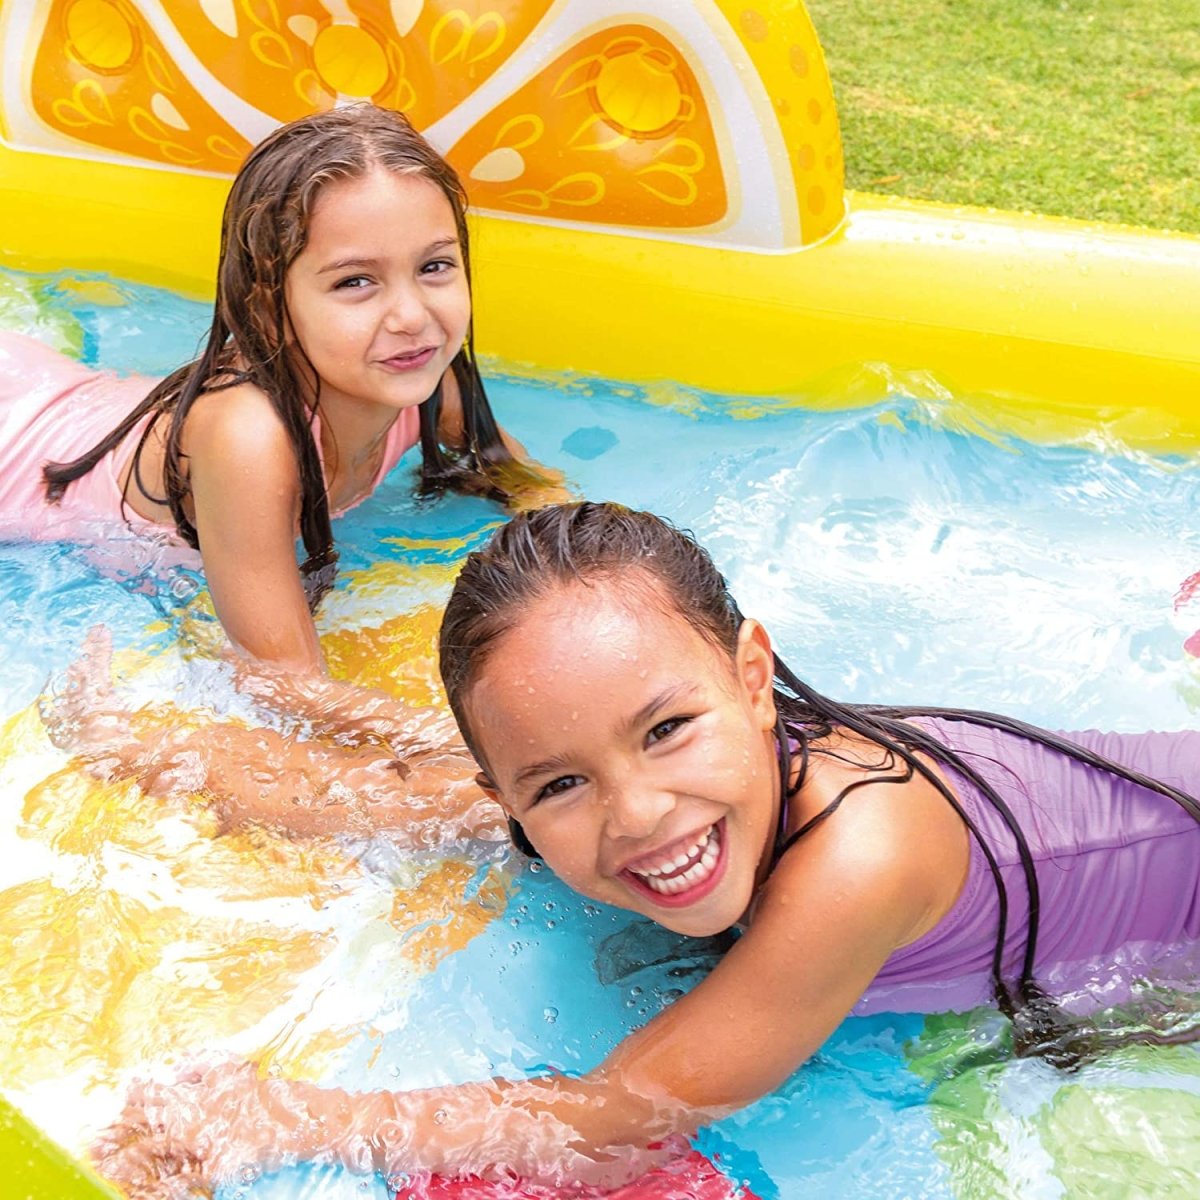 INTEX Fun'N Fruity Inflatable Play Centre Paddling Pool & Water Slide  57158EP Deals499